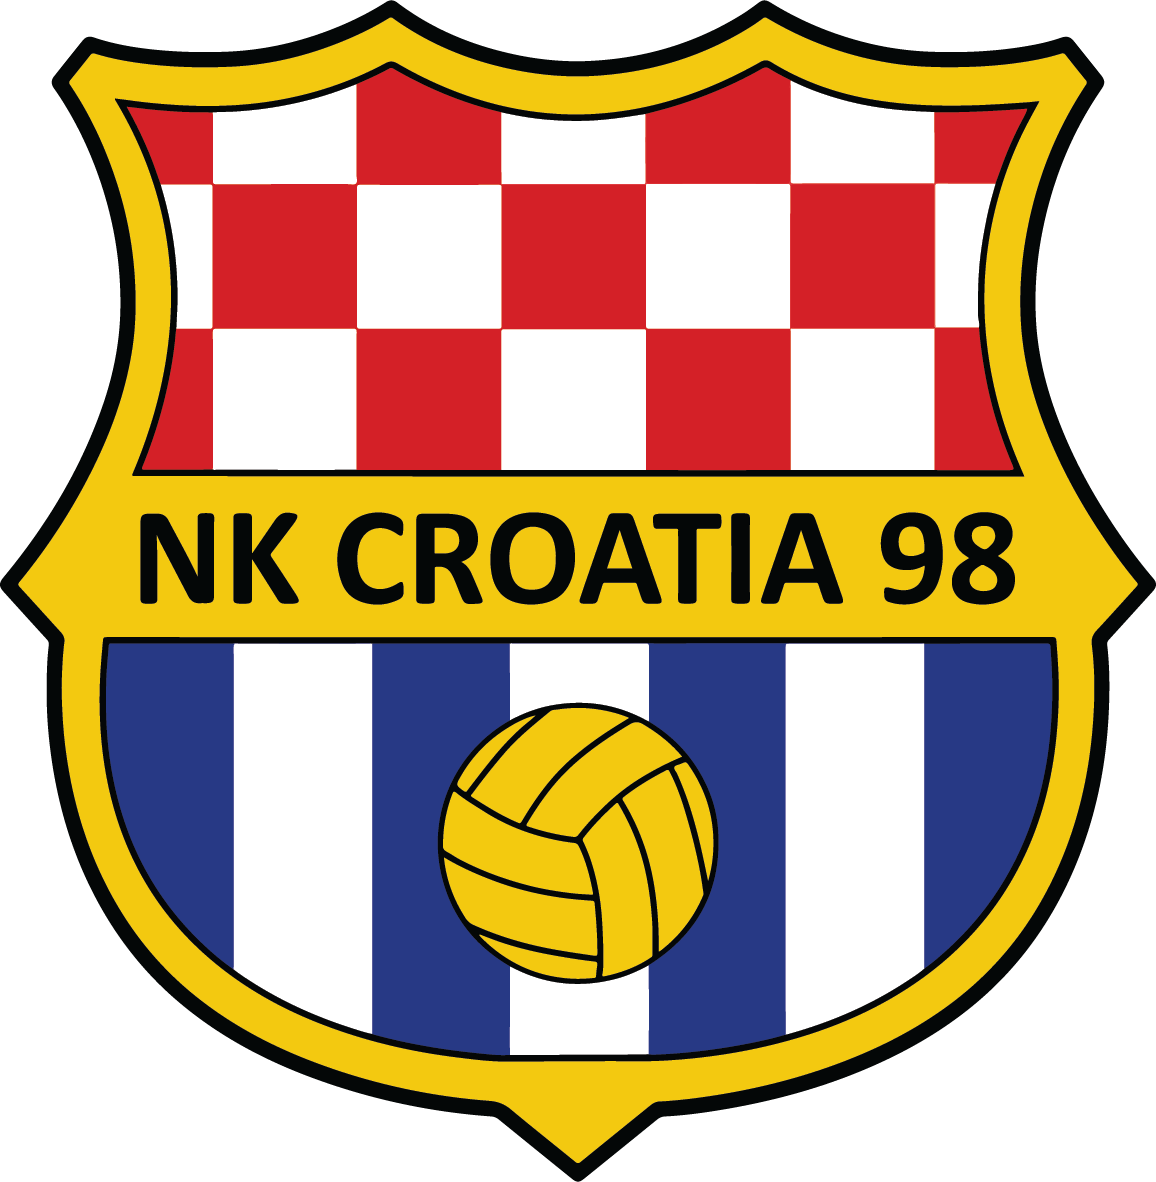 Croatia 98